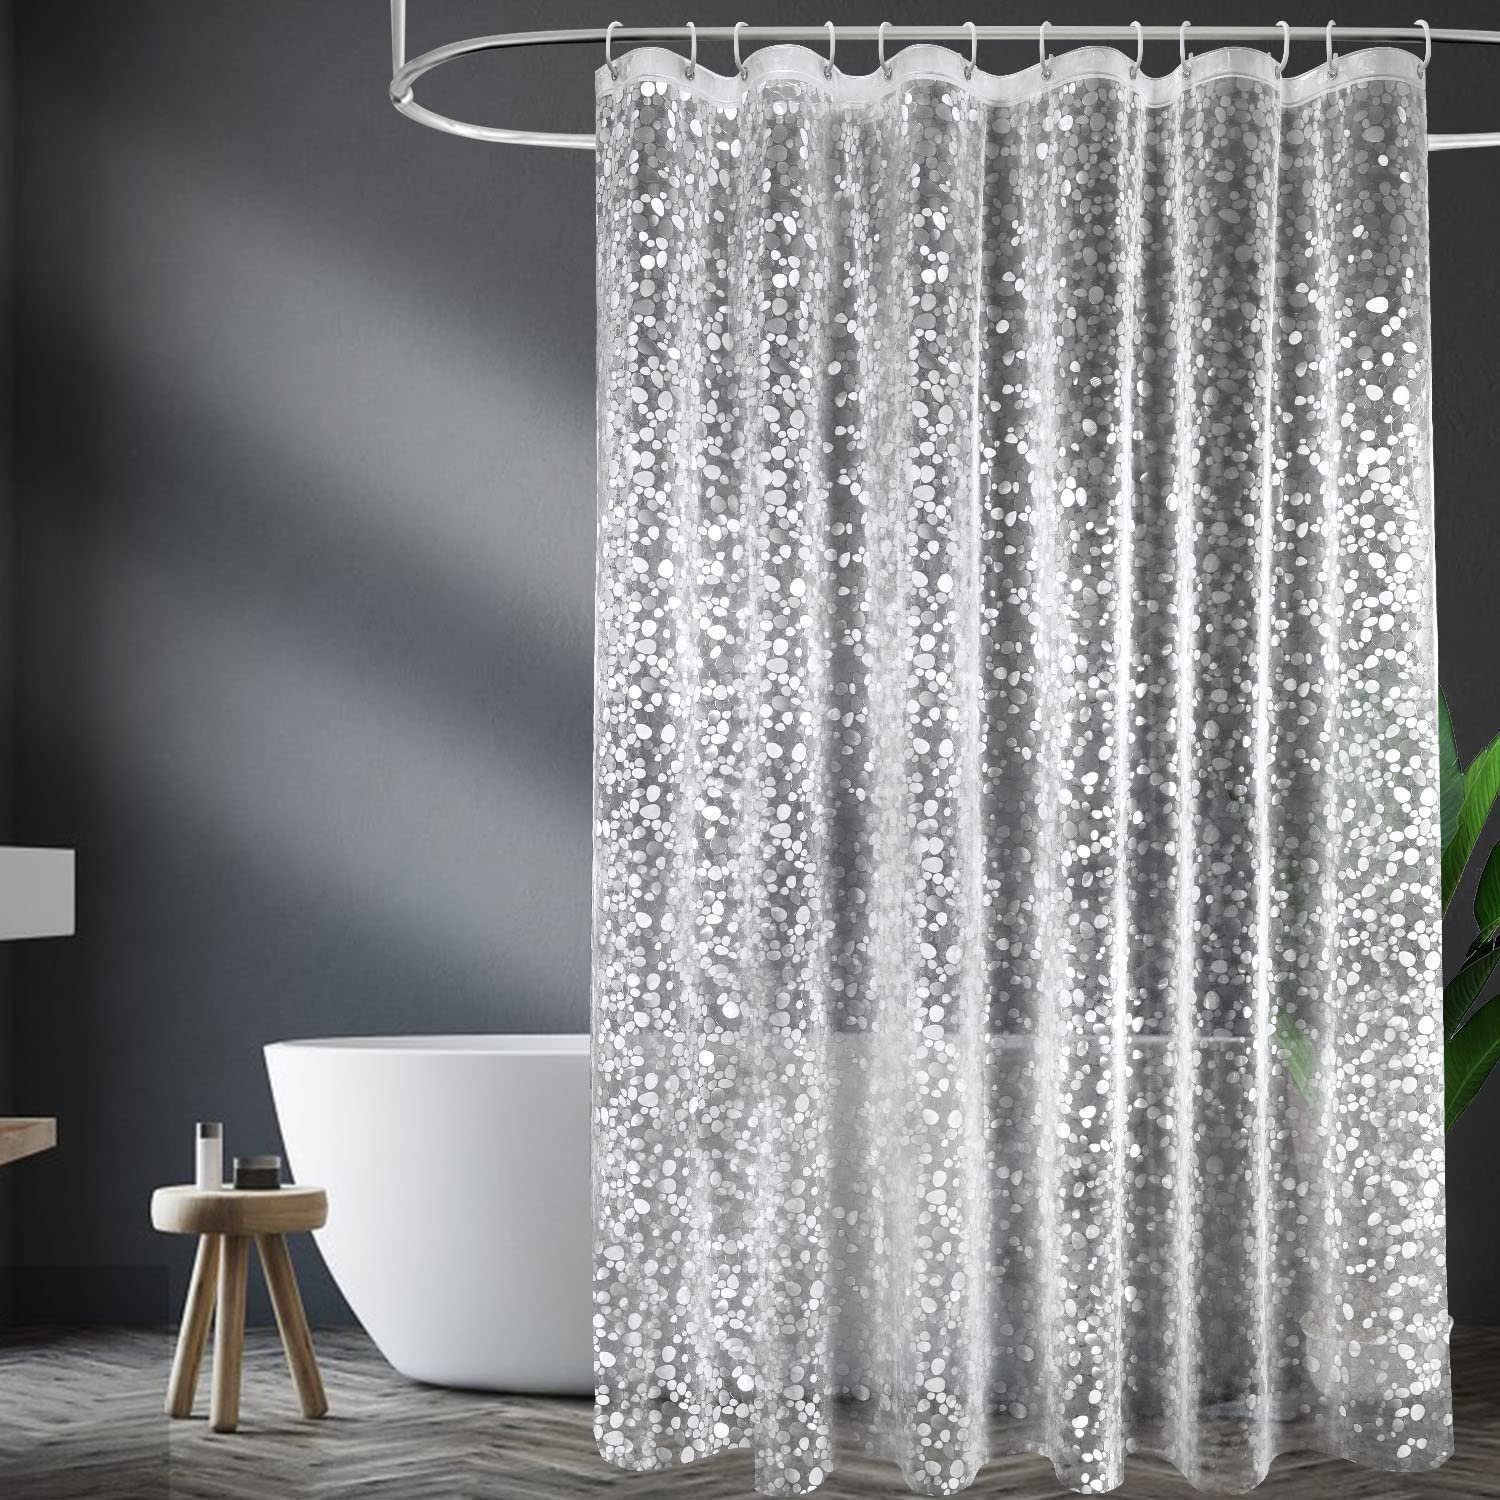 Haiaveng Duschvorhang Duschvorhang 180x180cm,Transparent mit 3D  Kieselsteinen Muster, Wasserdicht DuschVorhang für Badewanne